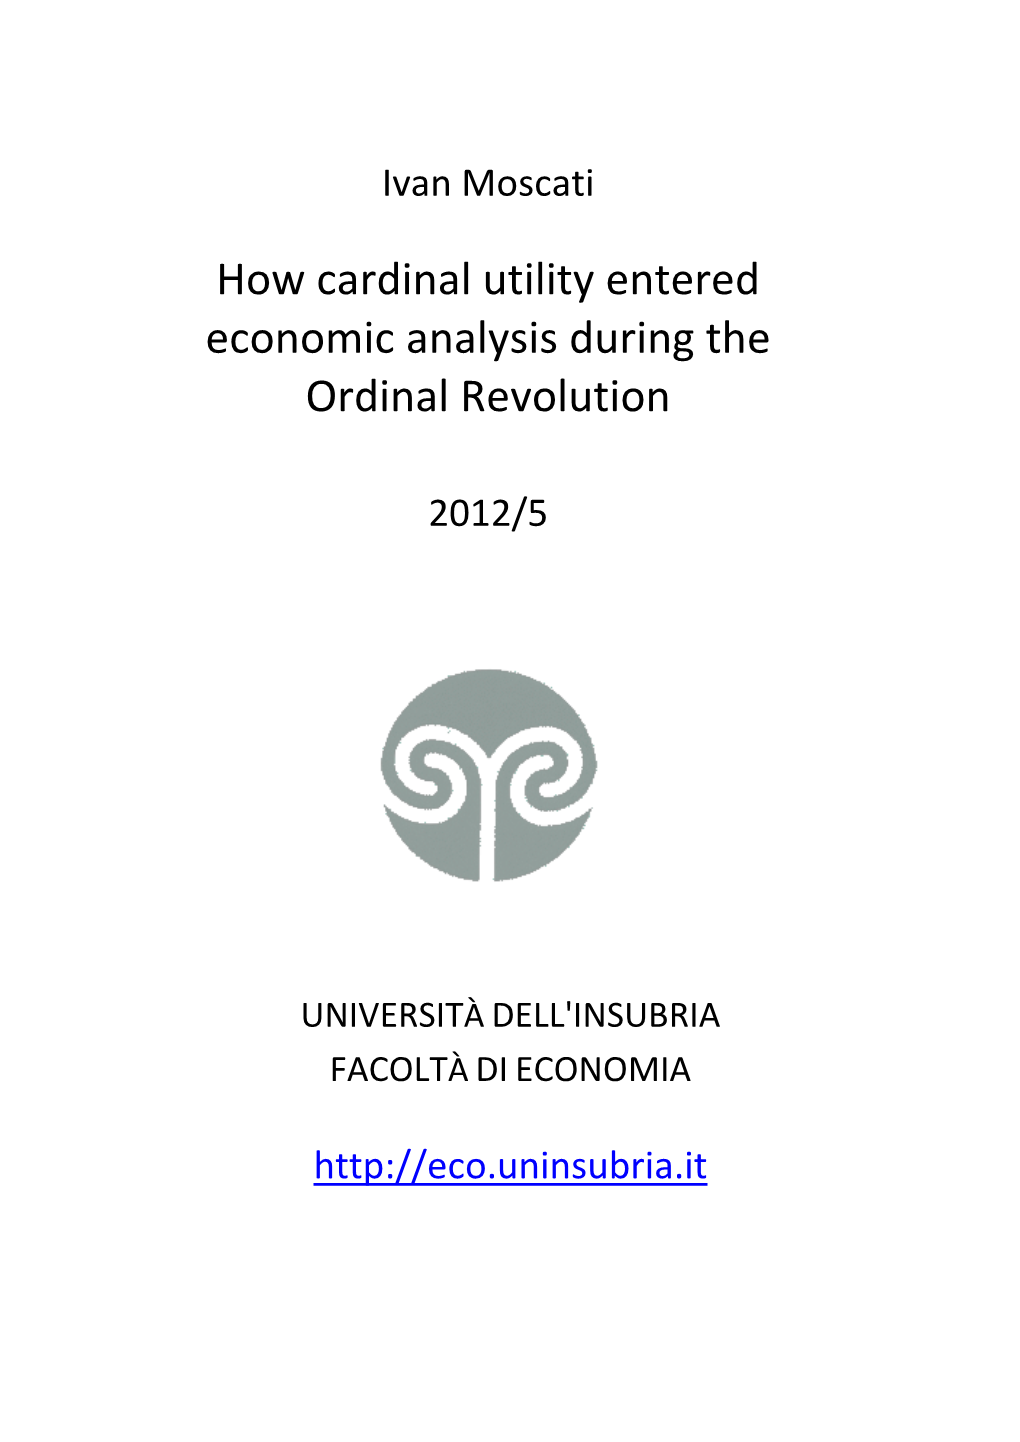 How Cardinal Utility Entered Economic Analysis During the Ordinal Revolution